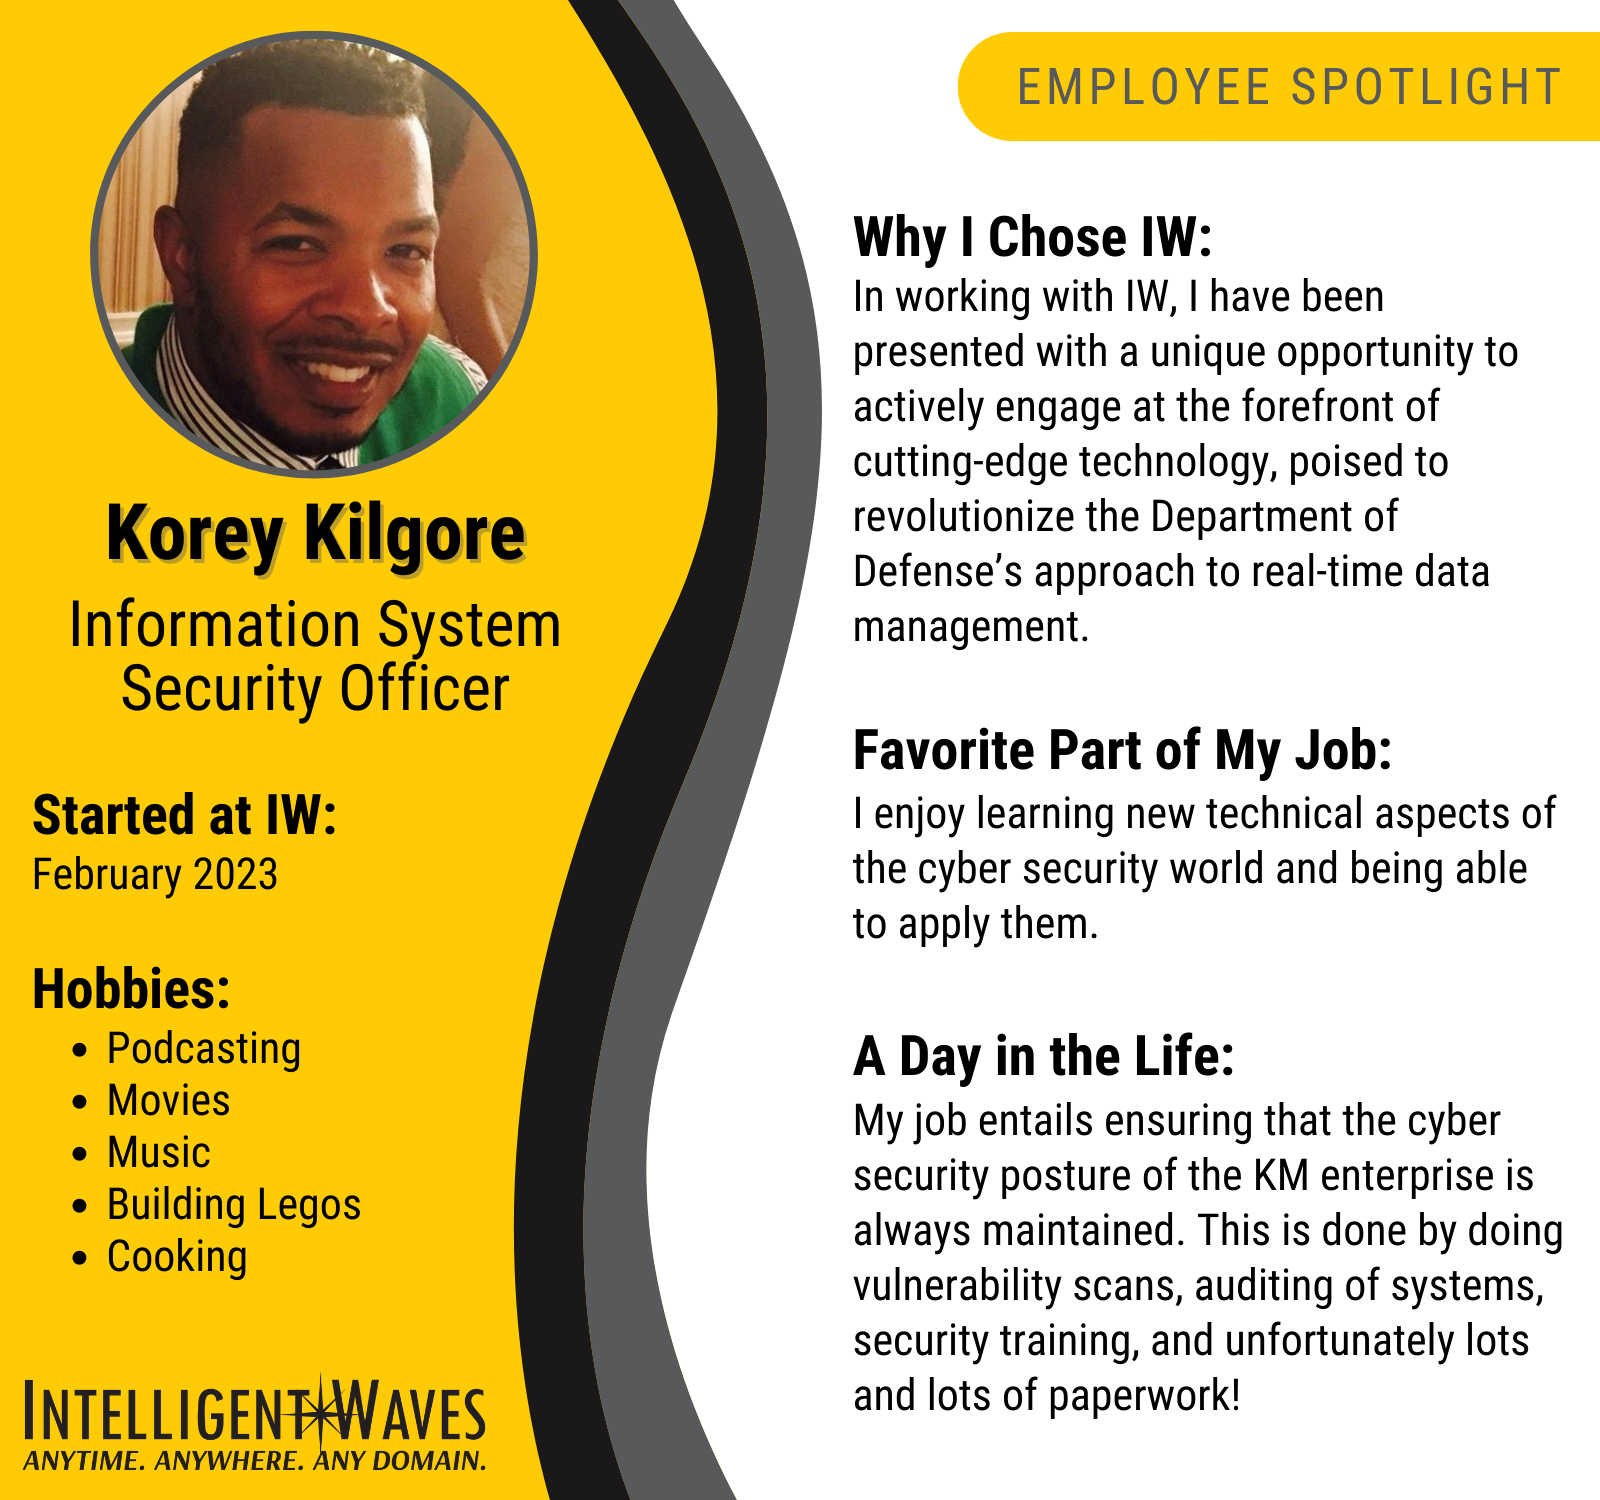 Korey Kilgore Employee Spotlight image